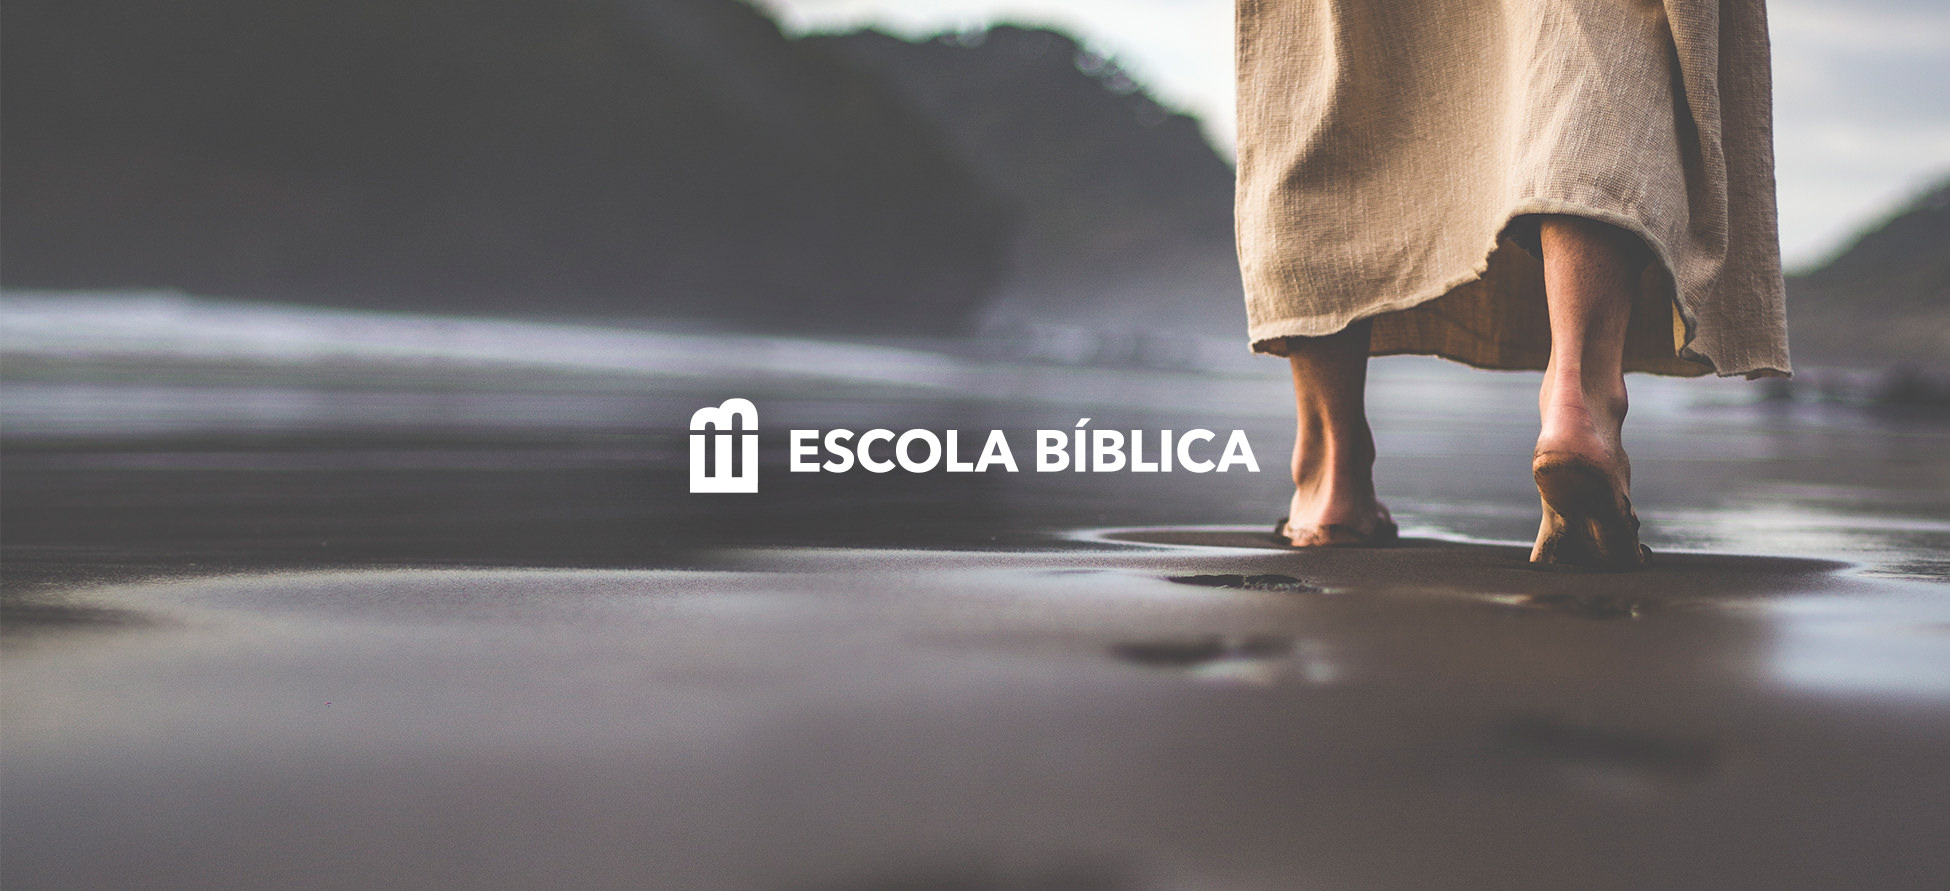 Escola_Biblica_Website_1950x891px_2019